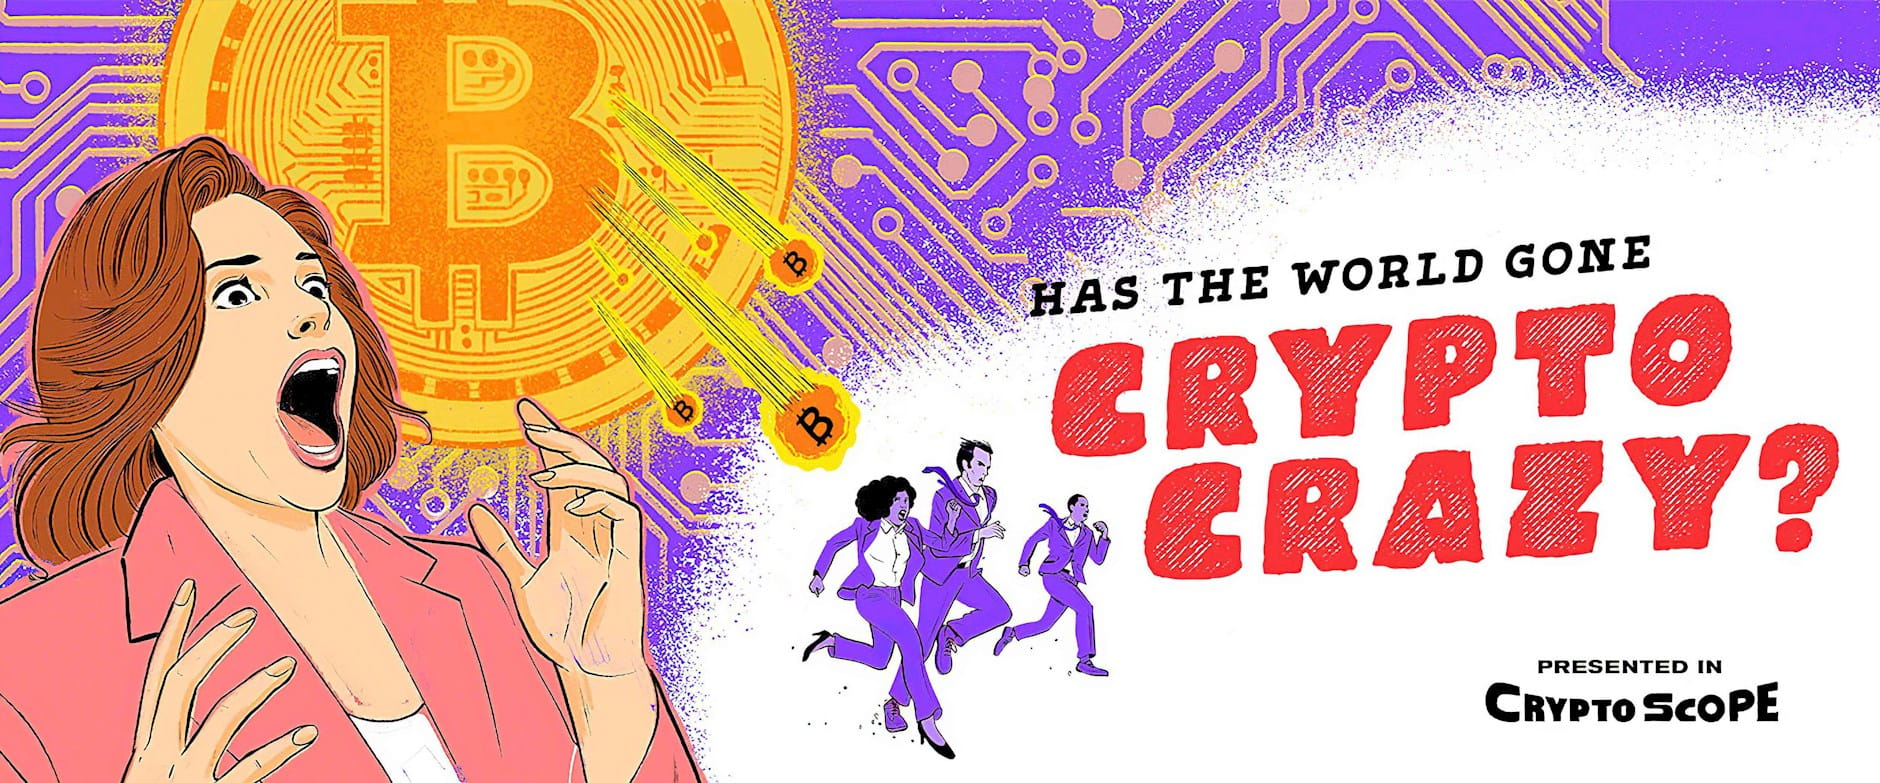 Pulp style illustration of woman afraid of Bitcoin